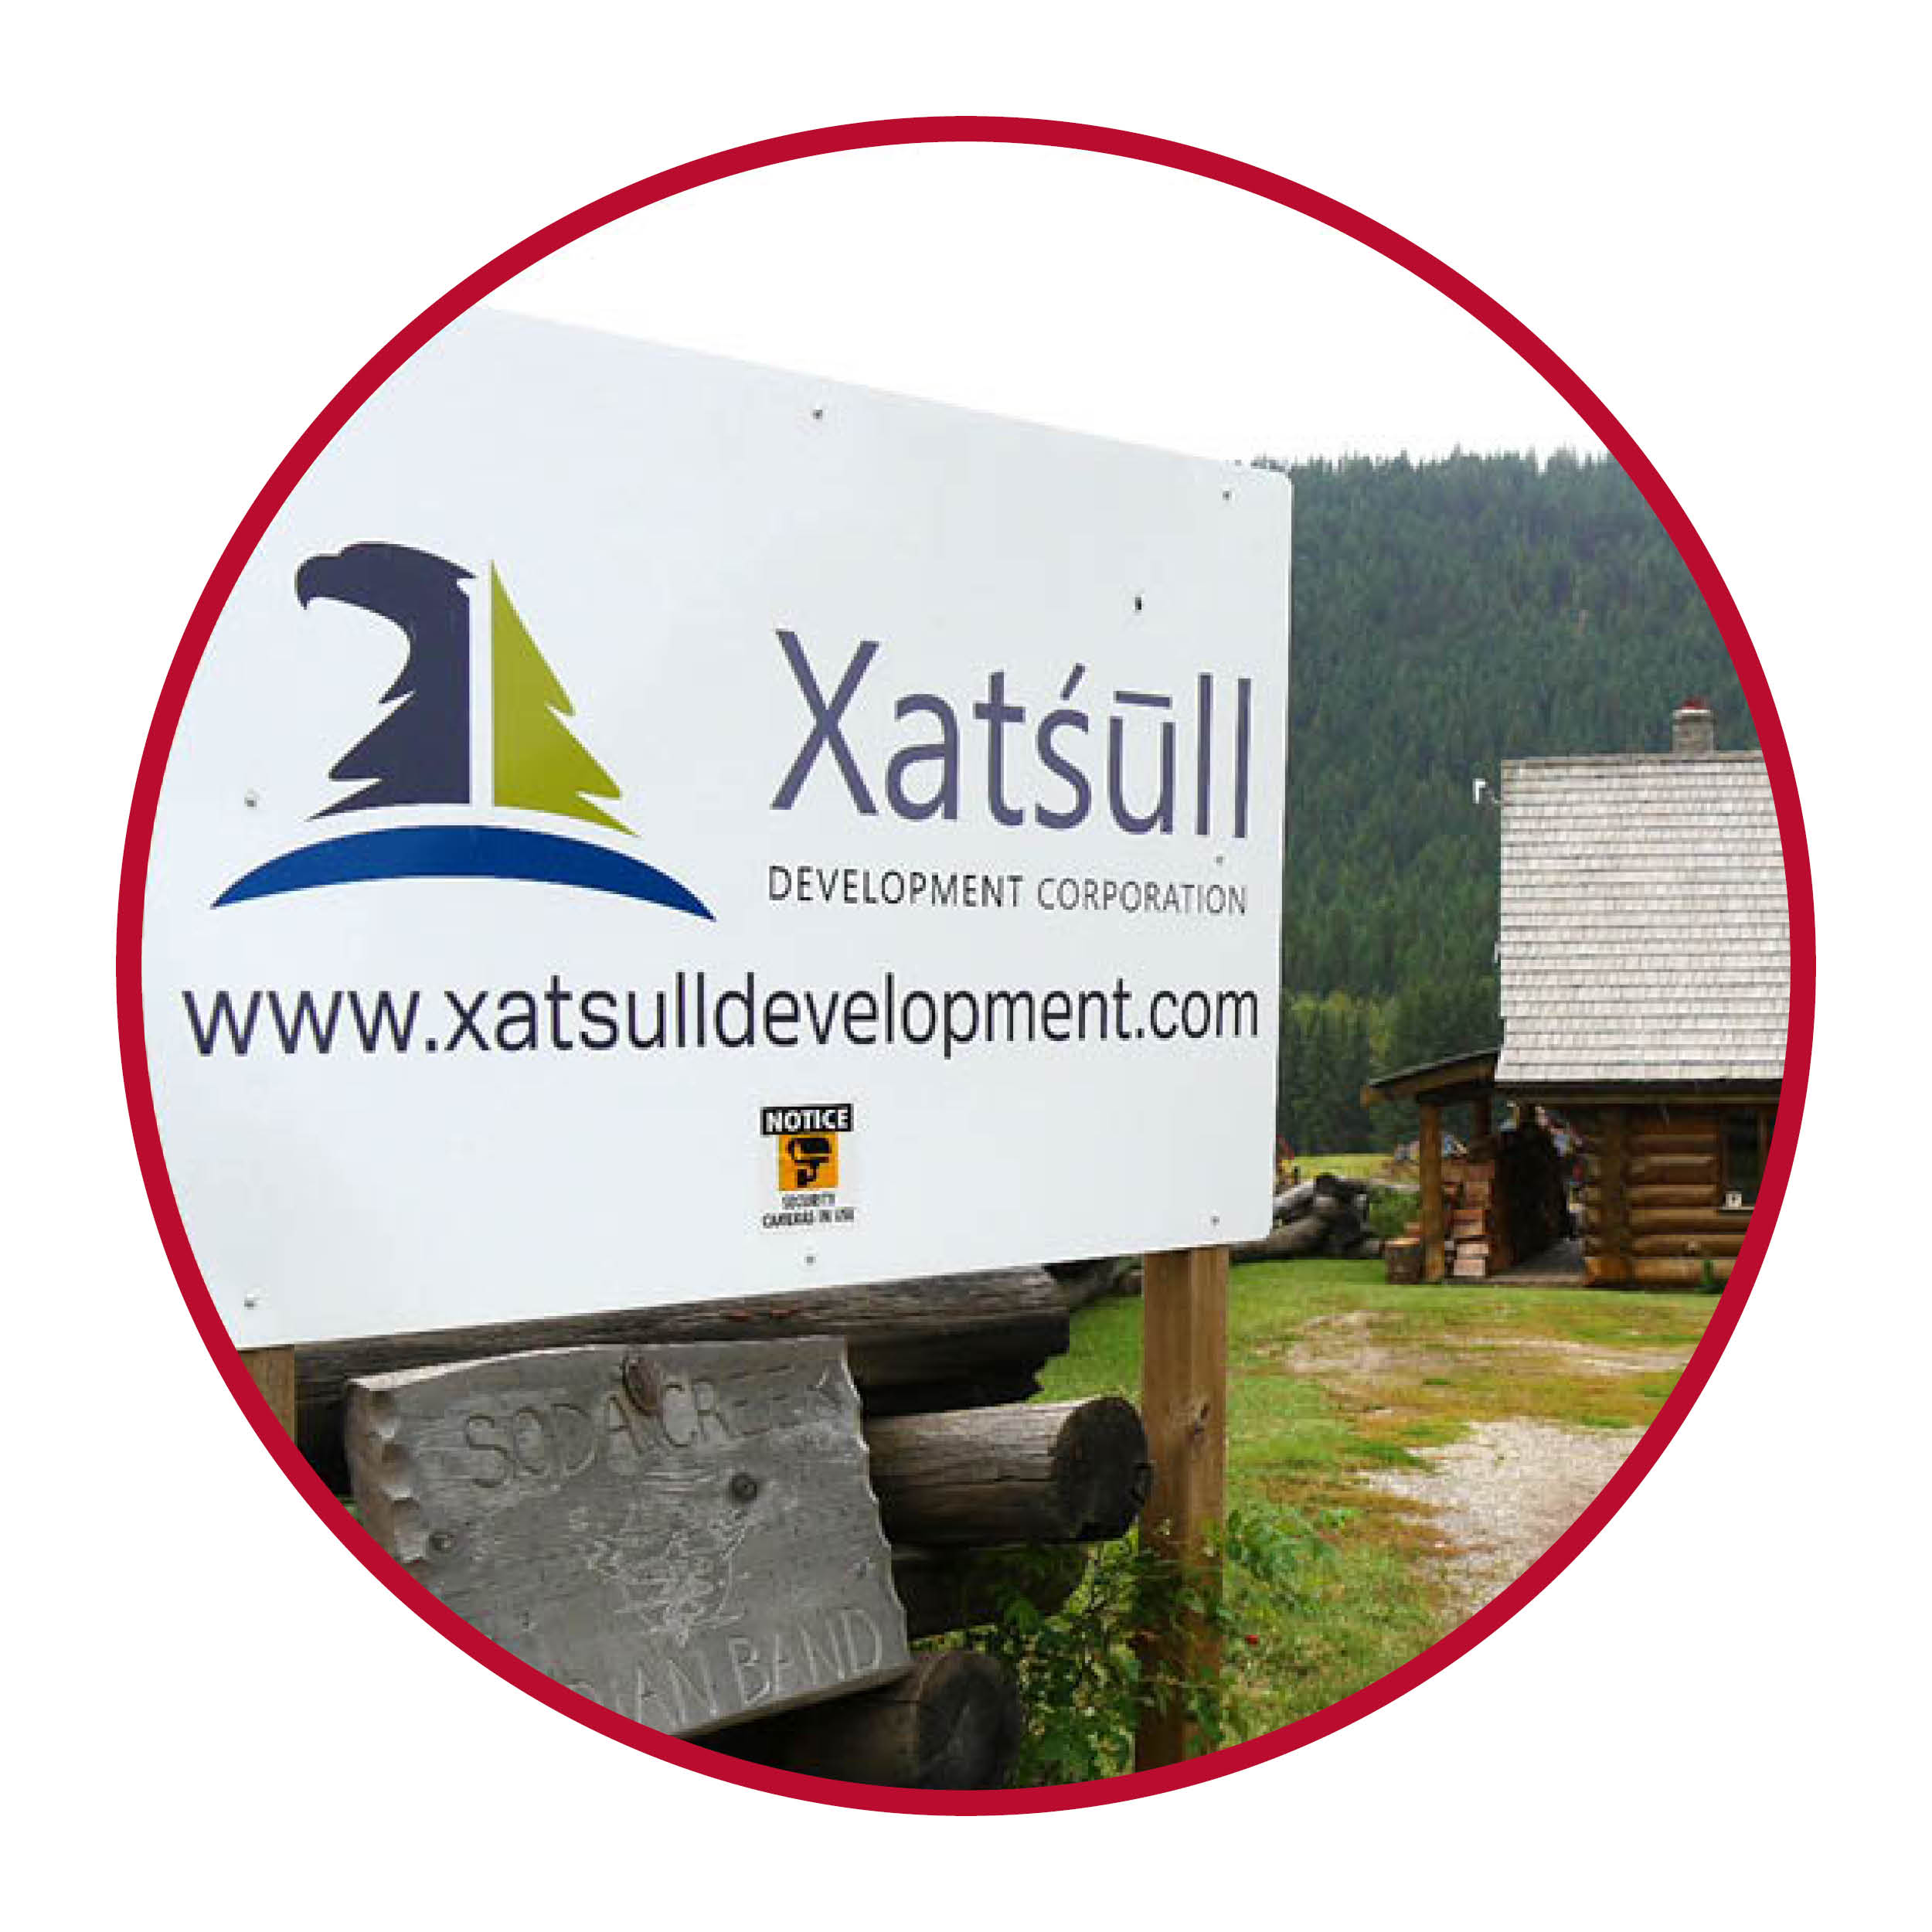 Xatsull Development Corporation